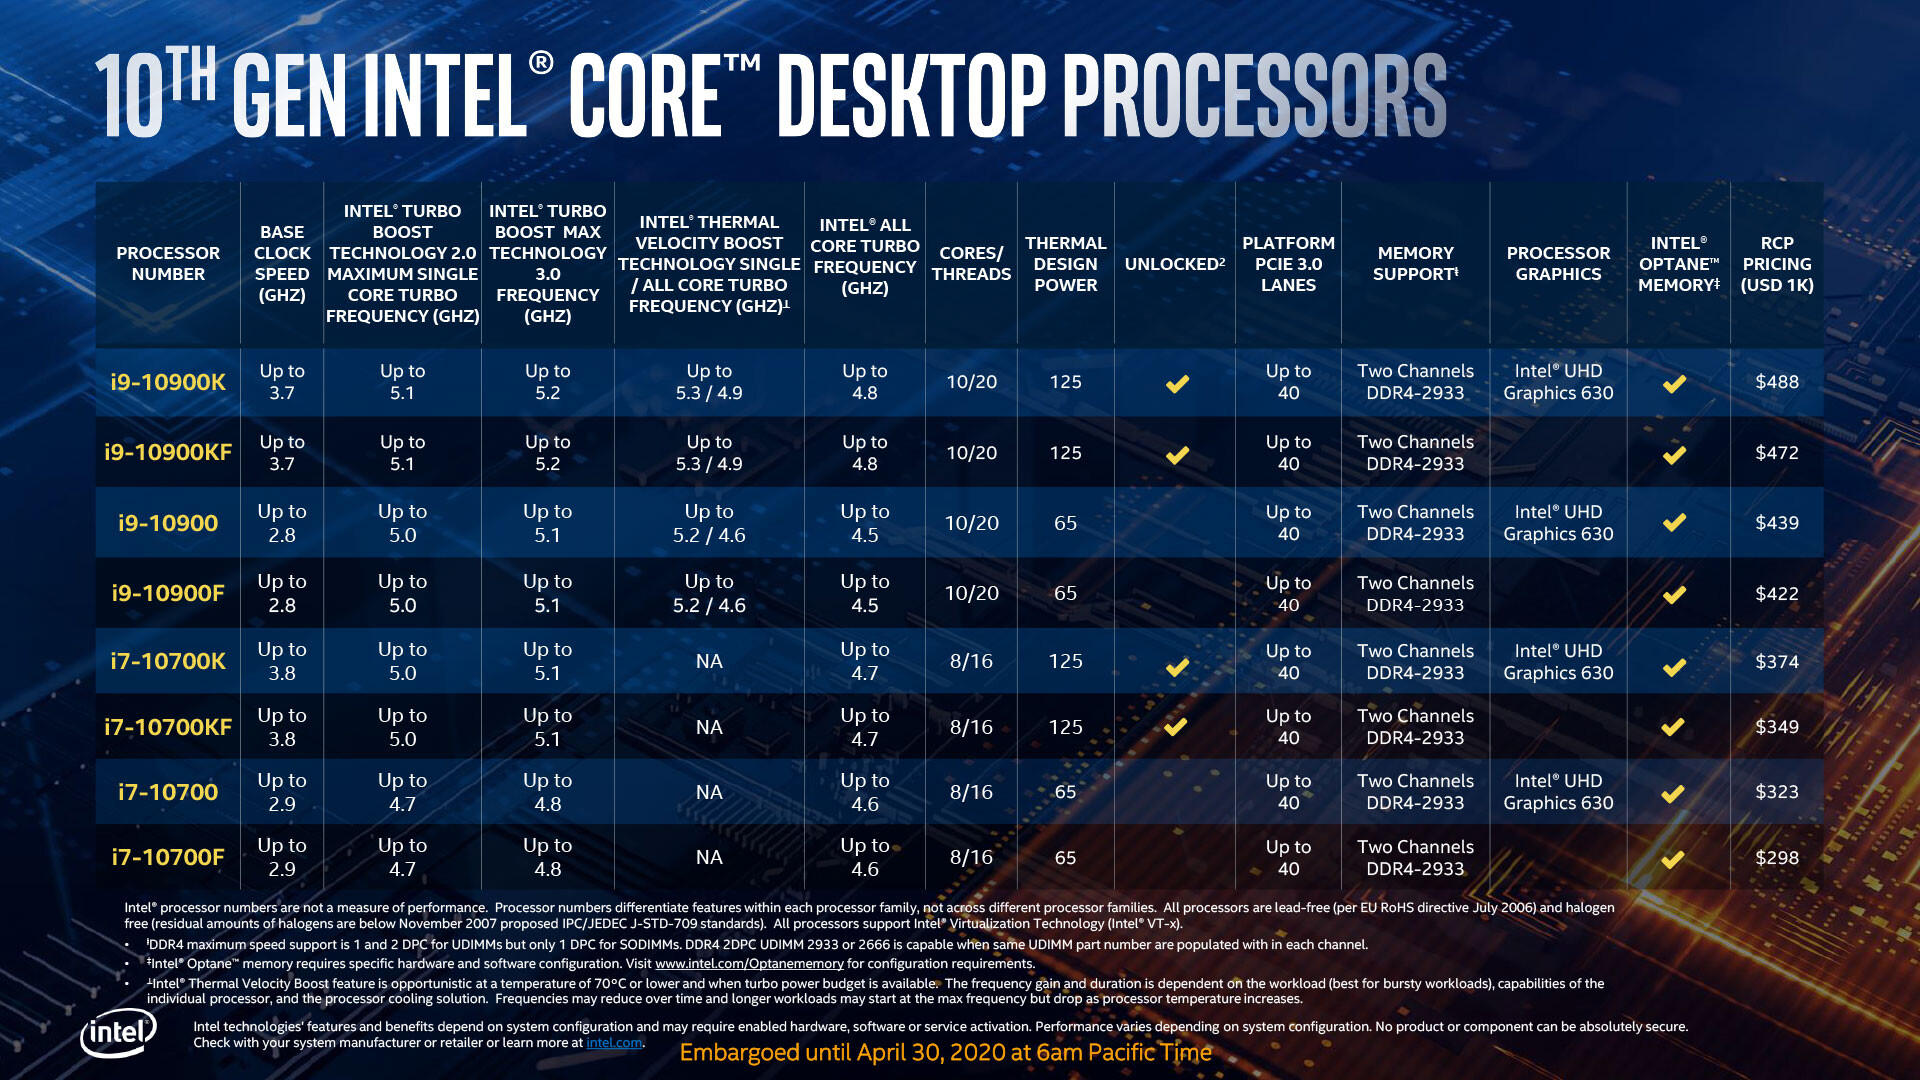 aooppasr5km93bh7 ลือ!! หลุดข้อมูลสเปคซีพียู Intel 10th Gen ทั้งหมดมากถึง 22 รุ่นในรหัส Comet Lake S อย่างไม่เป็นทางการ